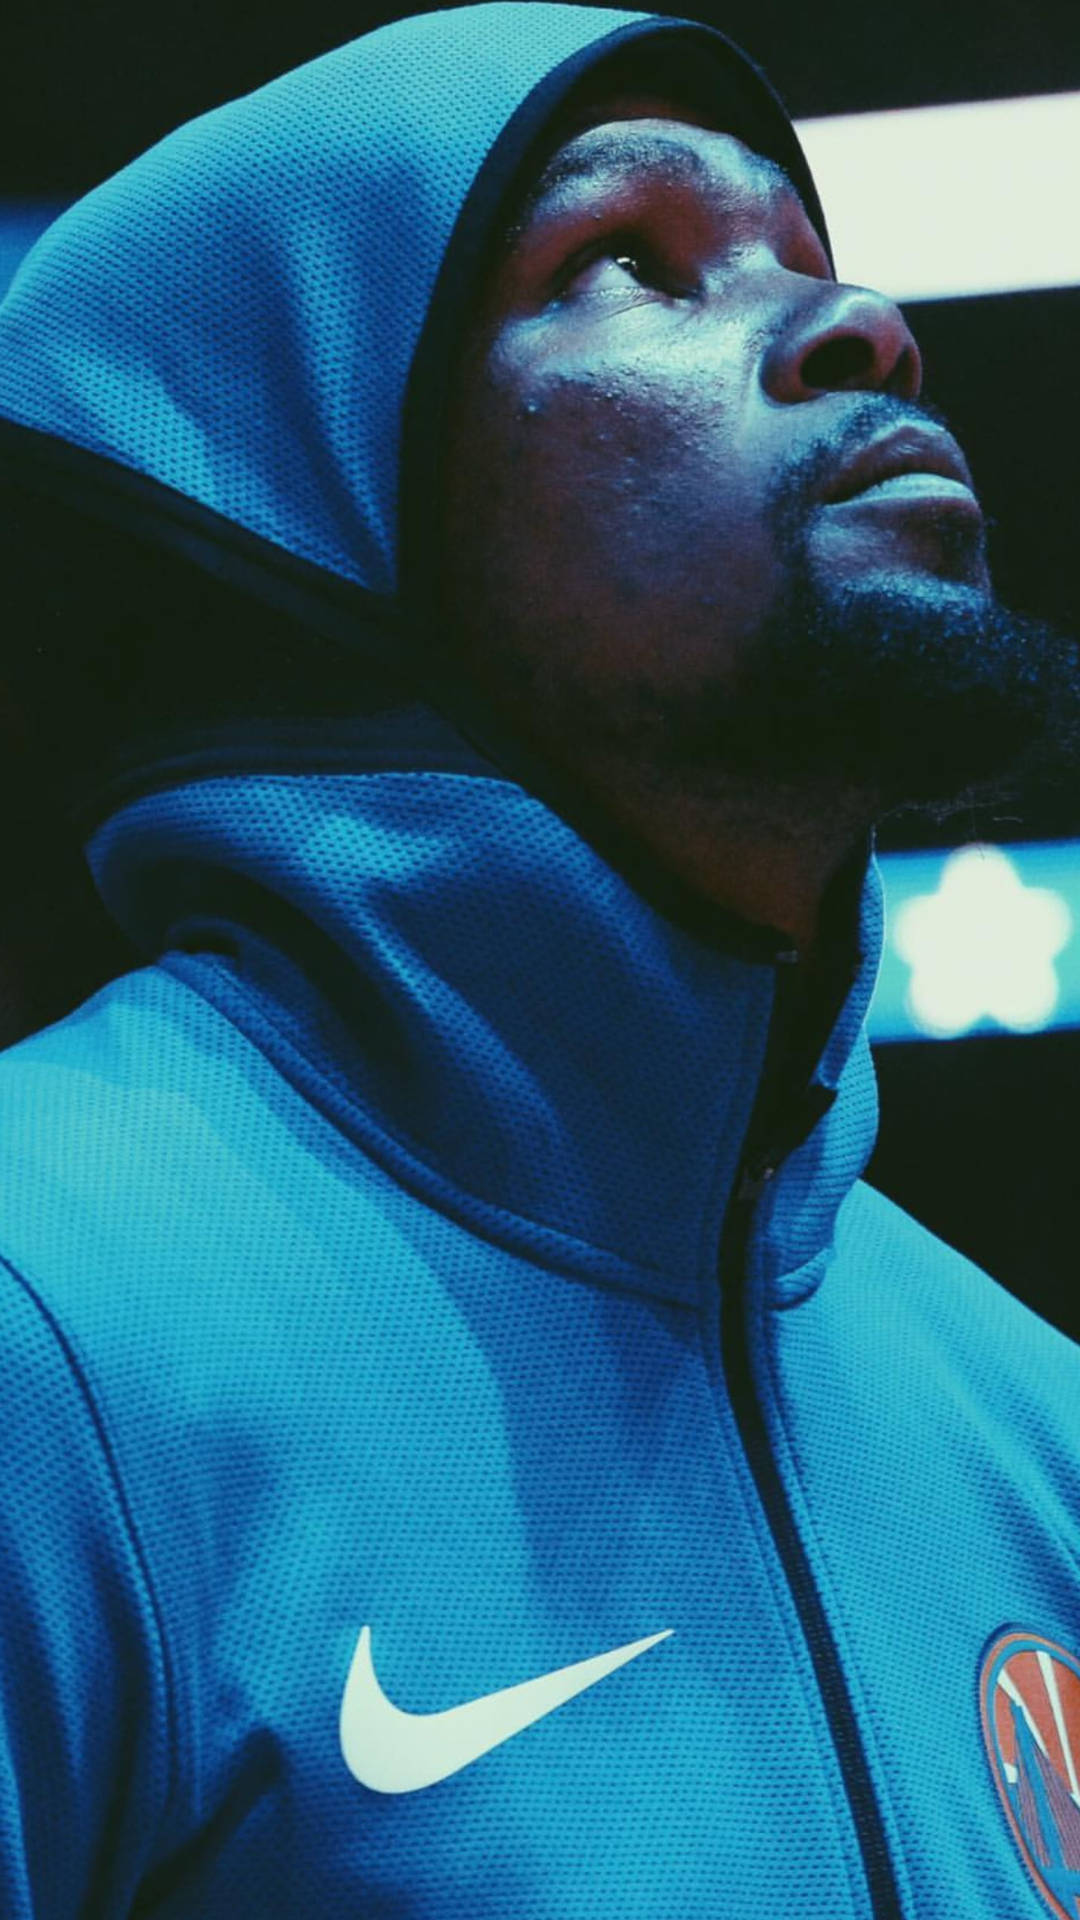 Nike Jacket Kevin Durant Cool Wallpaper